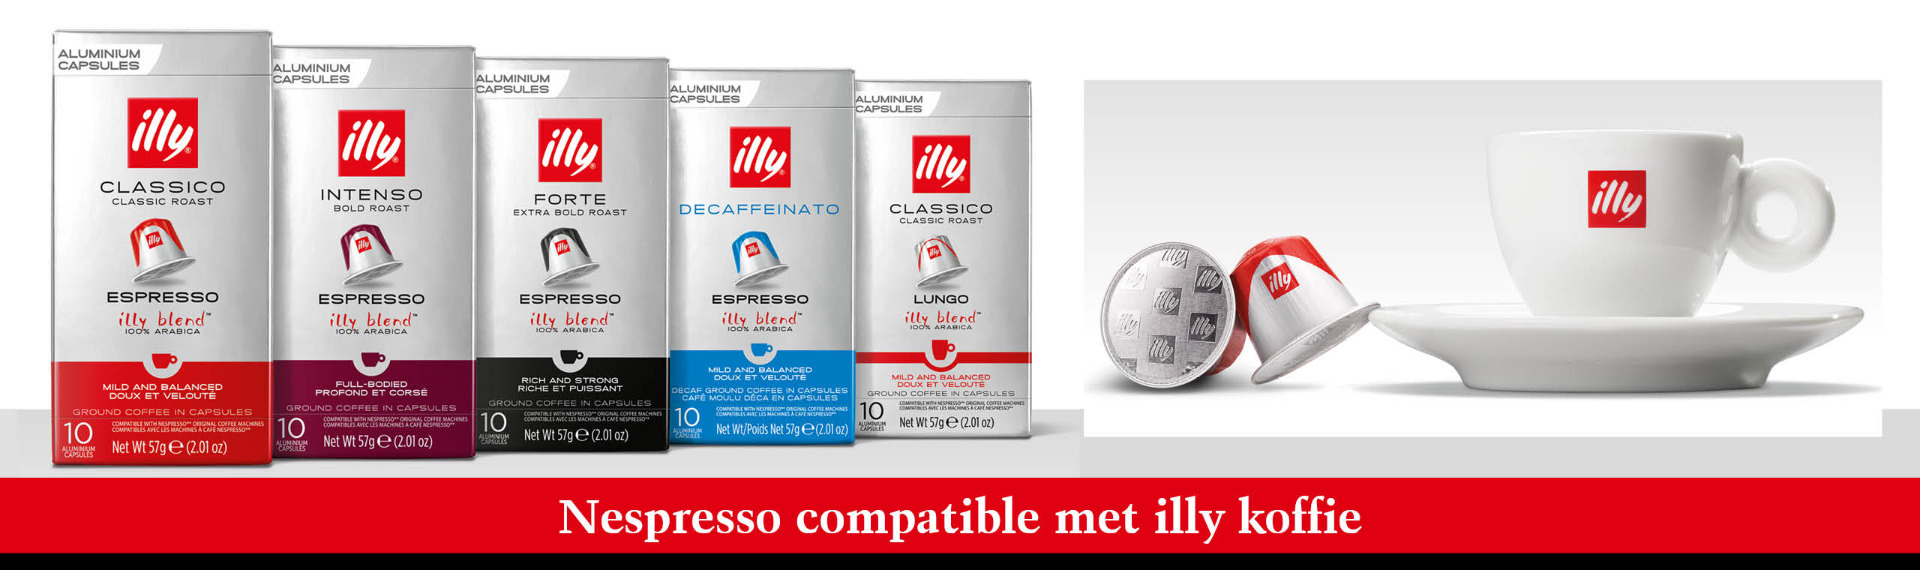 illy capsules Nespresso compatible